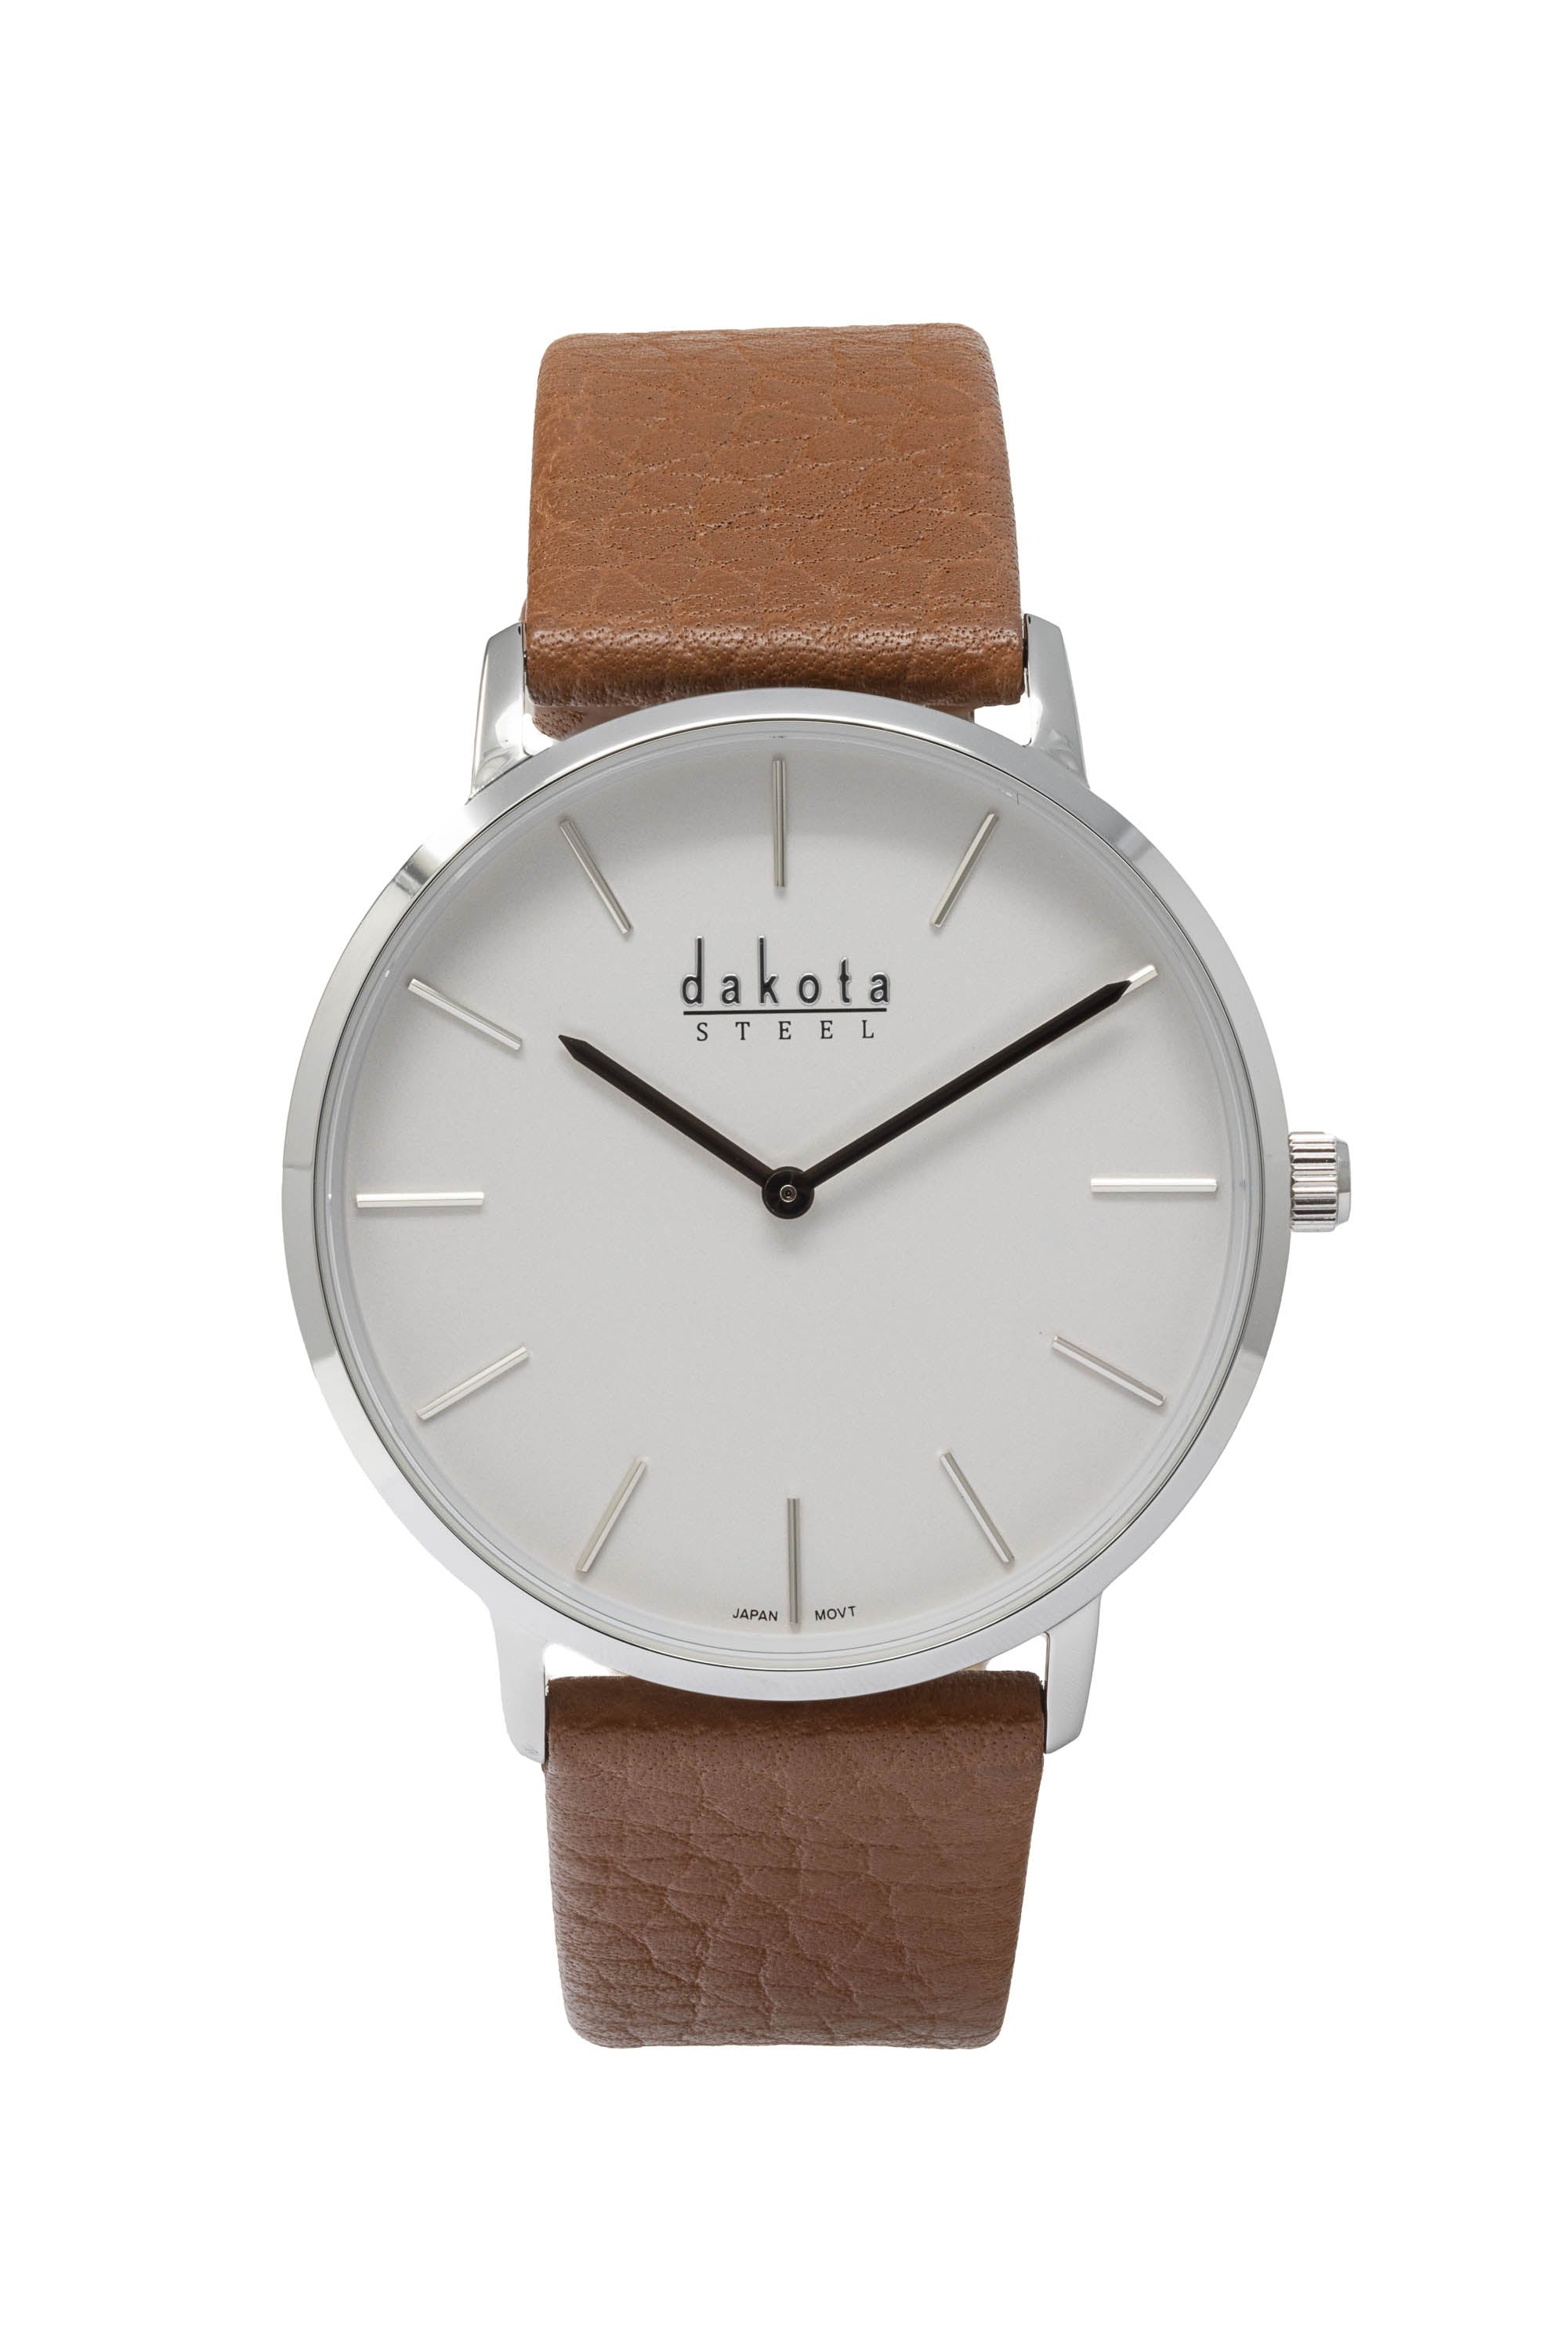 Buy Dakota Watch Company Digi Clip Watch Silver at Amazon.in